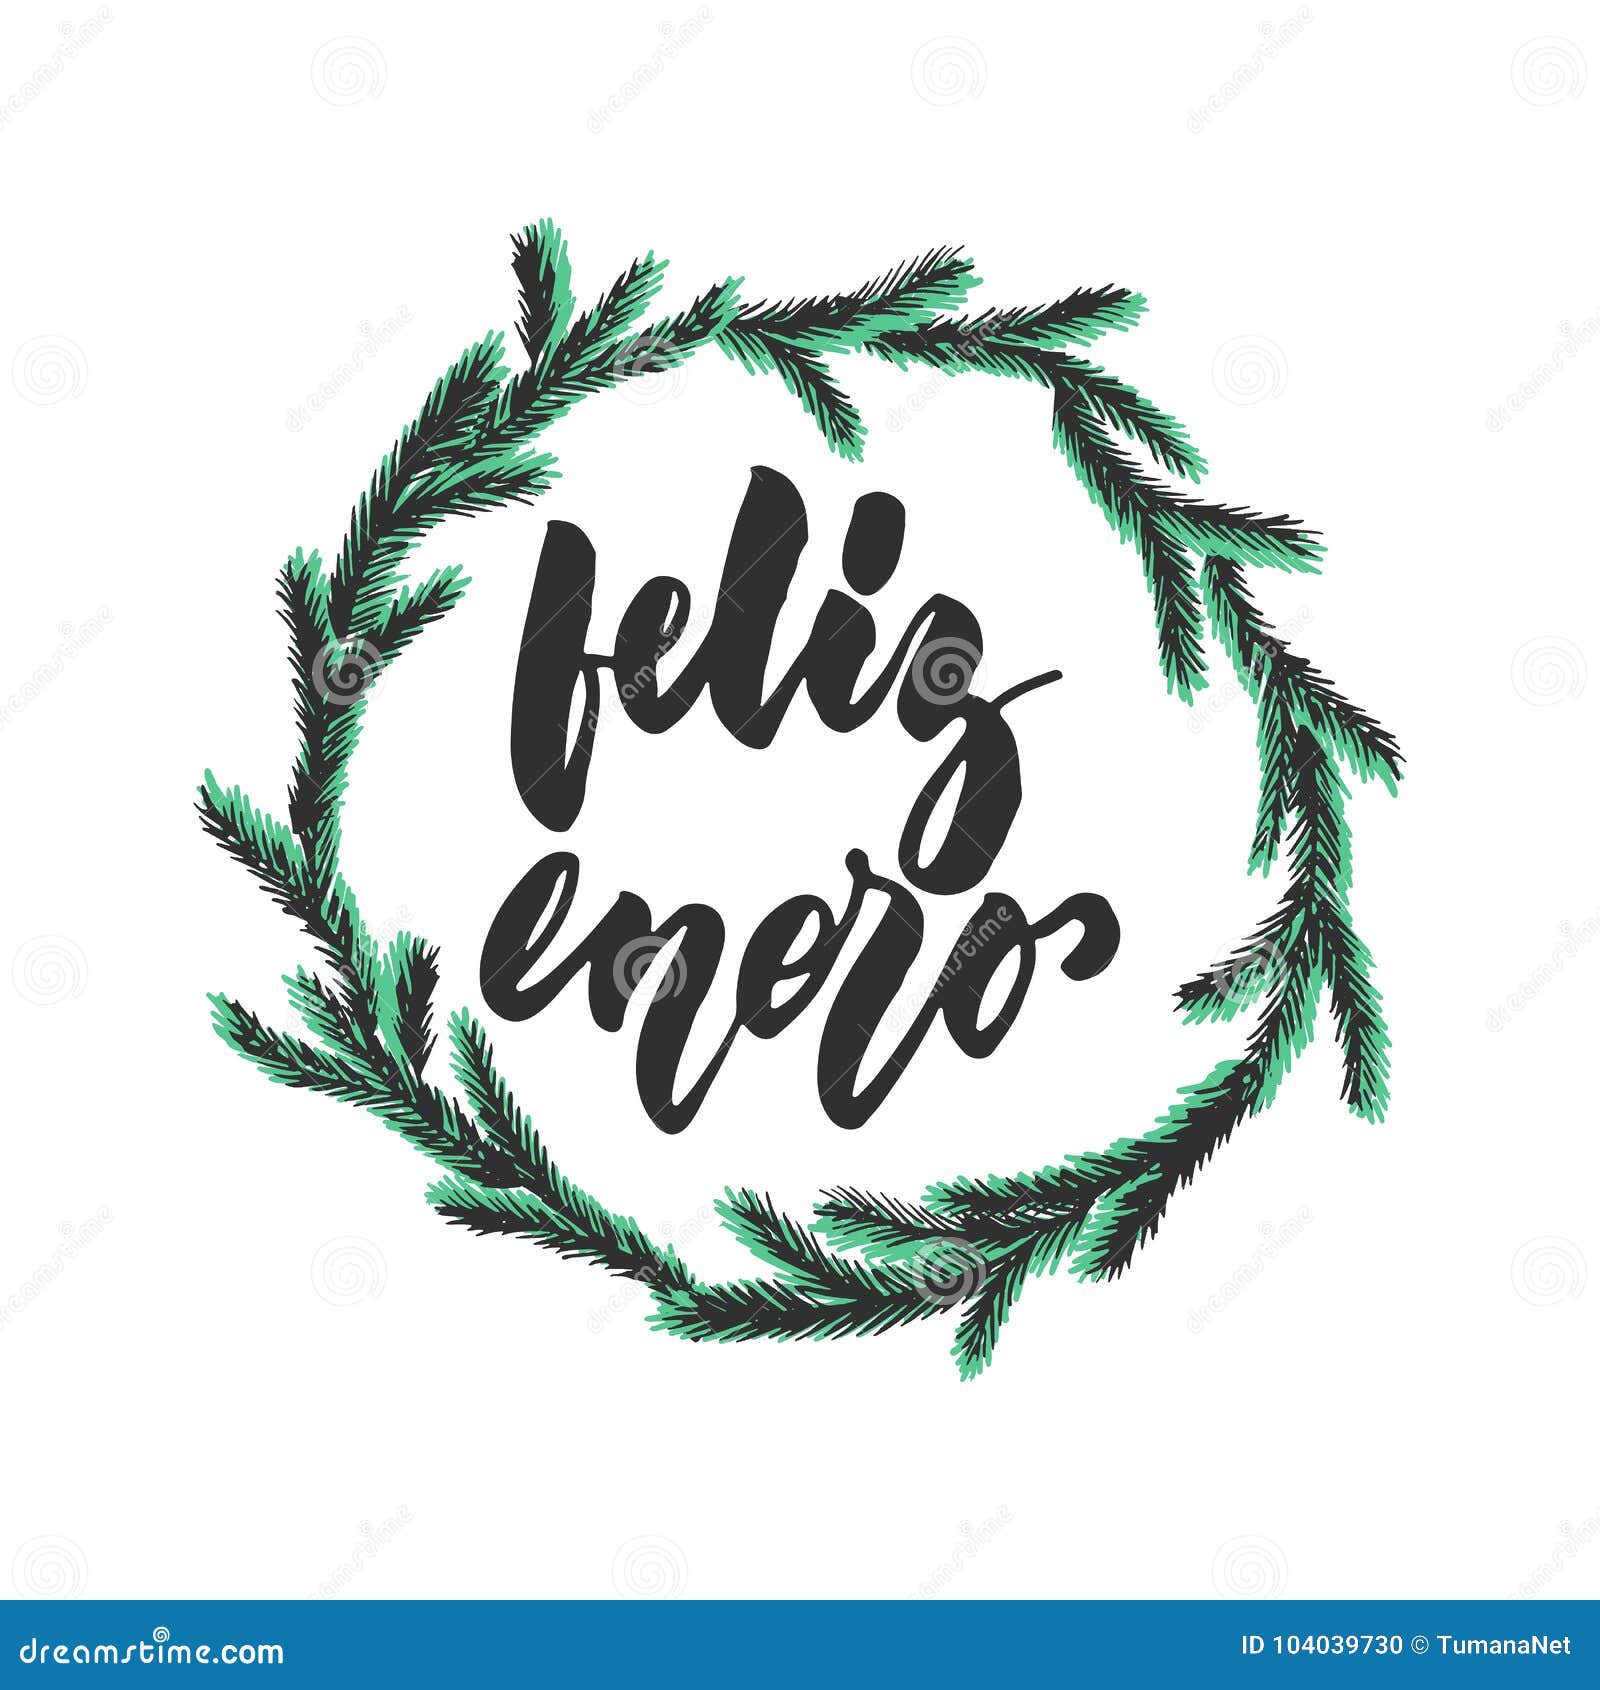 feliz enero - happ january in spanish, hand drawn latin winter month lettering quote